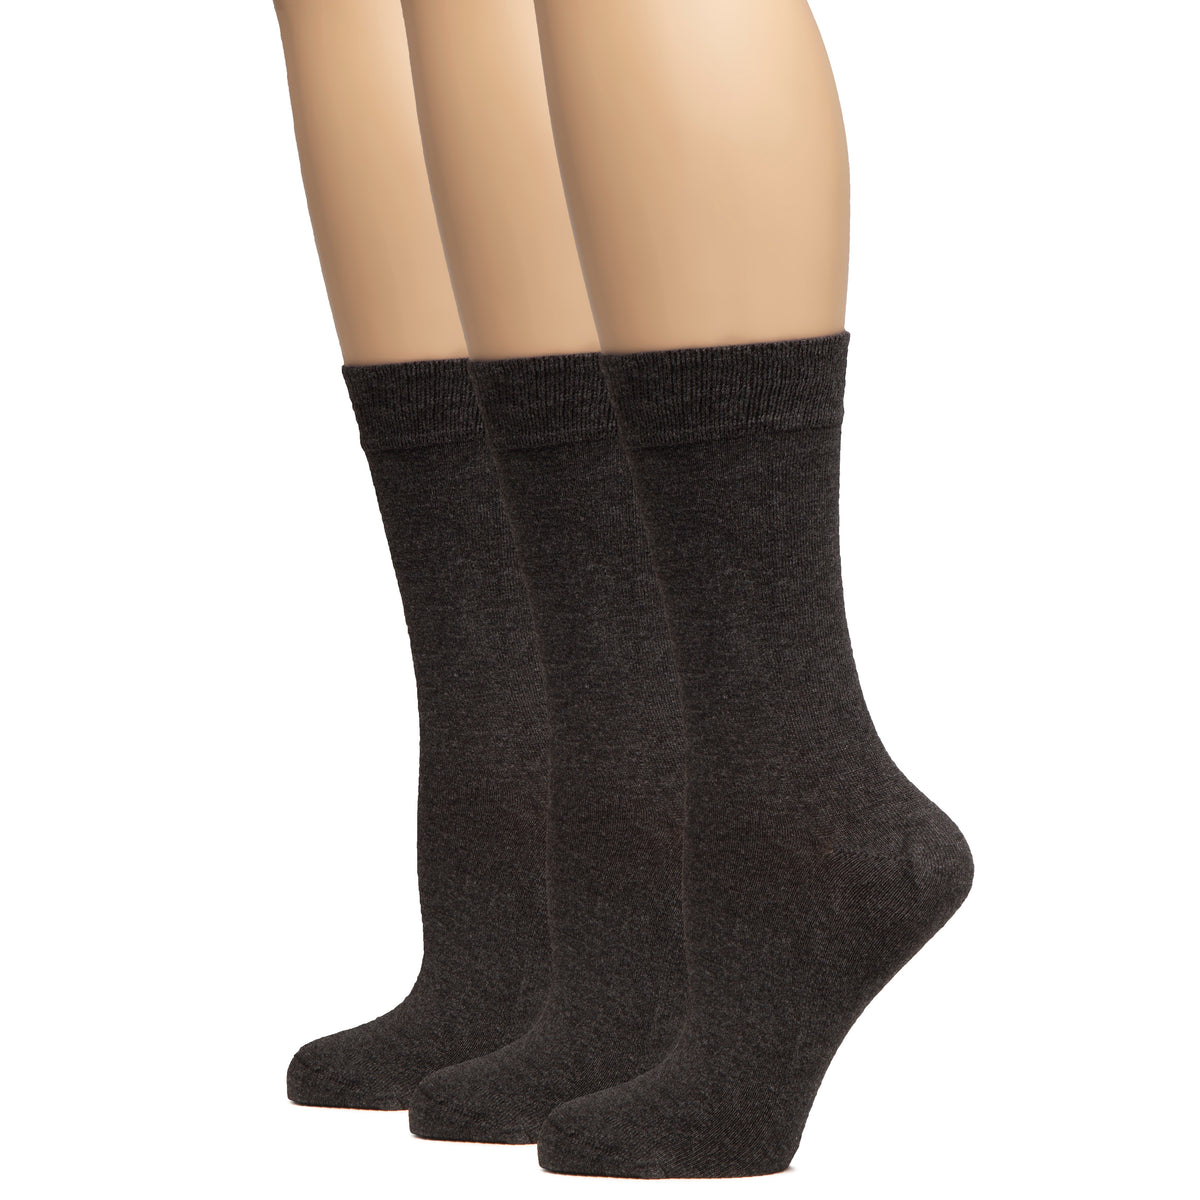 Hugh Ugoli Women's Bamboo Dress Socks Crew Soft Comfy Seamless Toe, 3 Pairs, Shoe Size: 5-8/9-11 | Shoe Size: 9-11 | Dark Grey